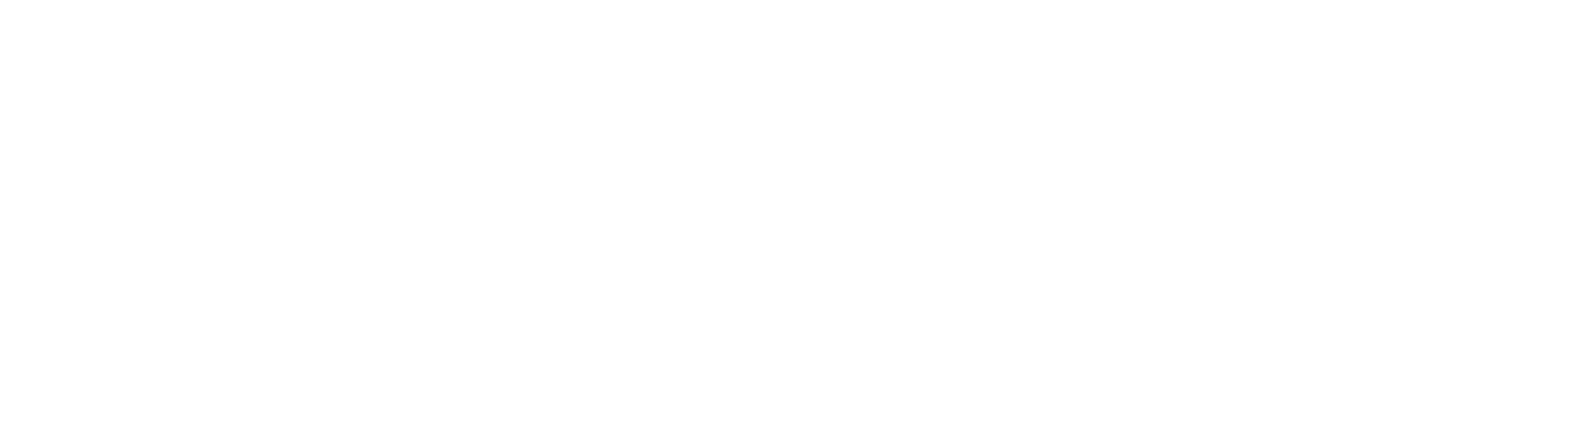 Alcon logo large for dark backgrounds (transparent PNG)